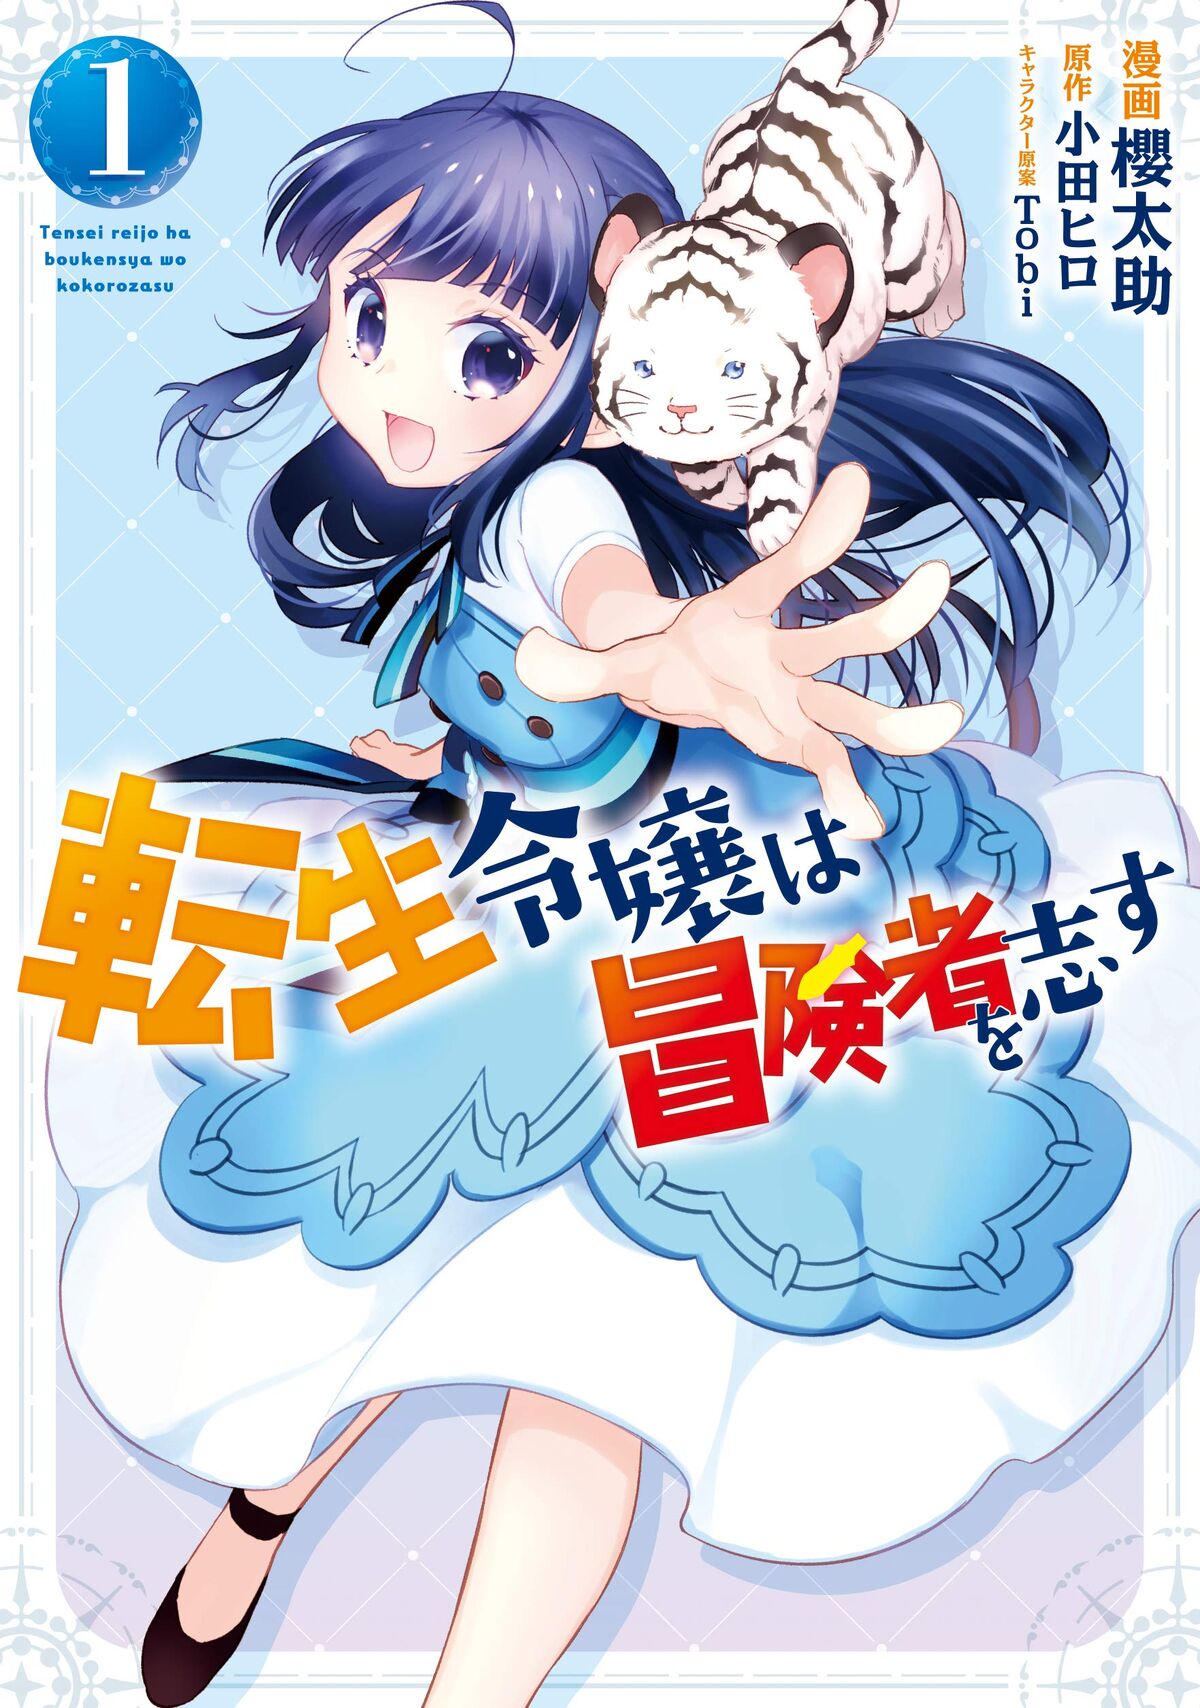 Tensei Kenja wa Musume to Kurasu Image by Kabocha #2570331 - Zerochan Anime  Image Board